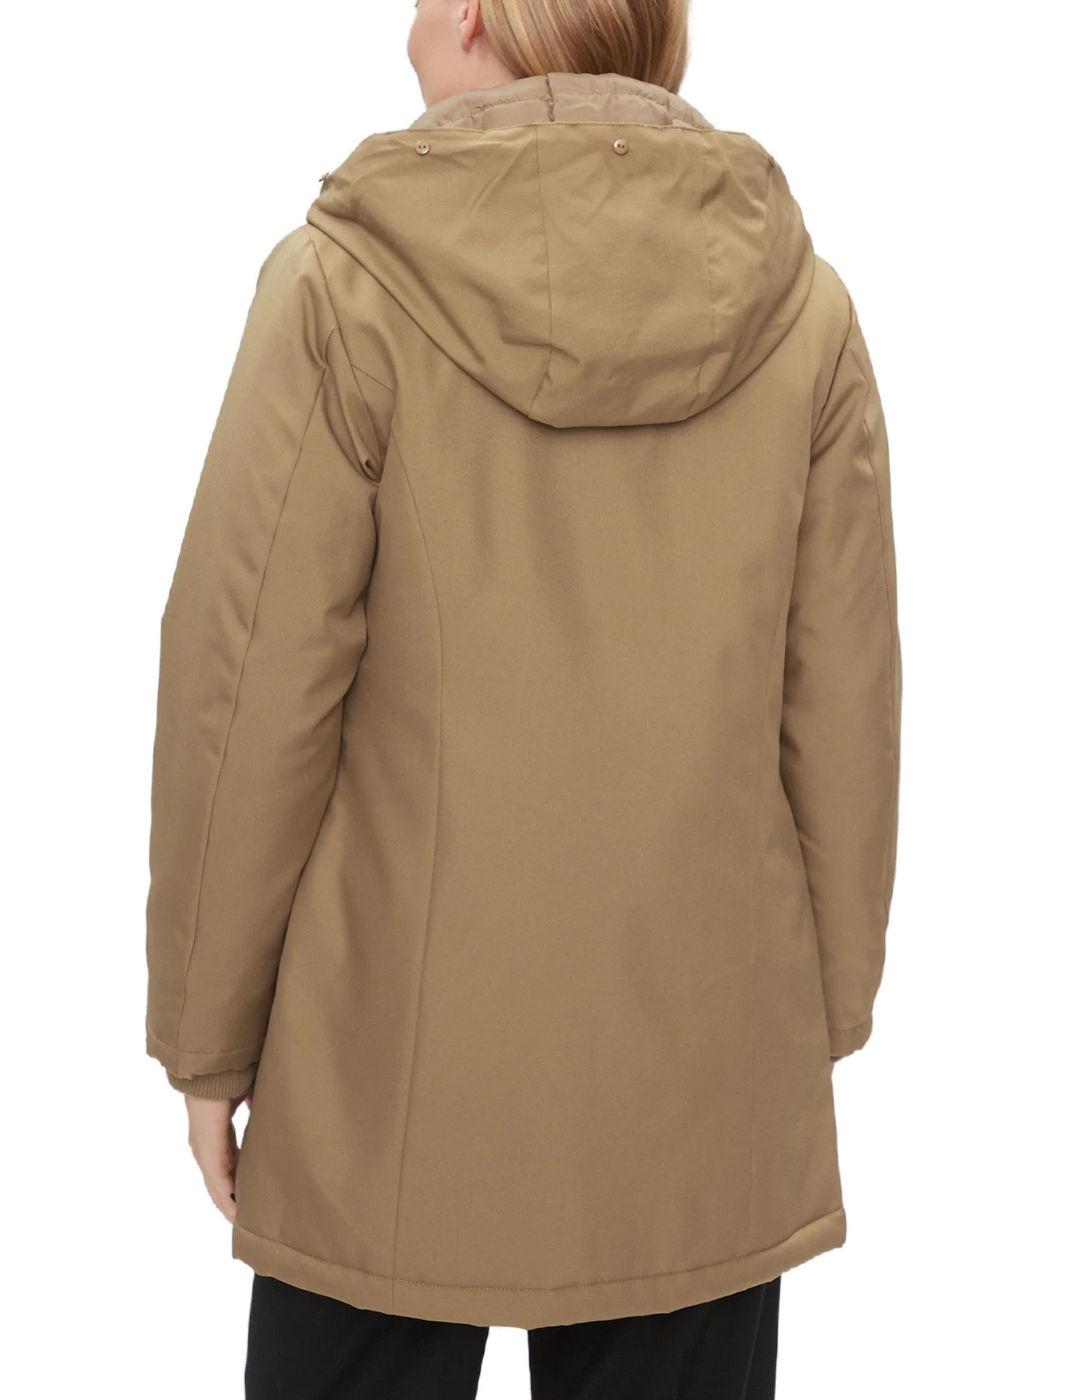 Mujer parka impermeable abrigo peluche capucha y piel desmontables